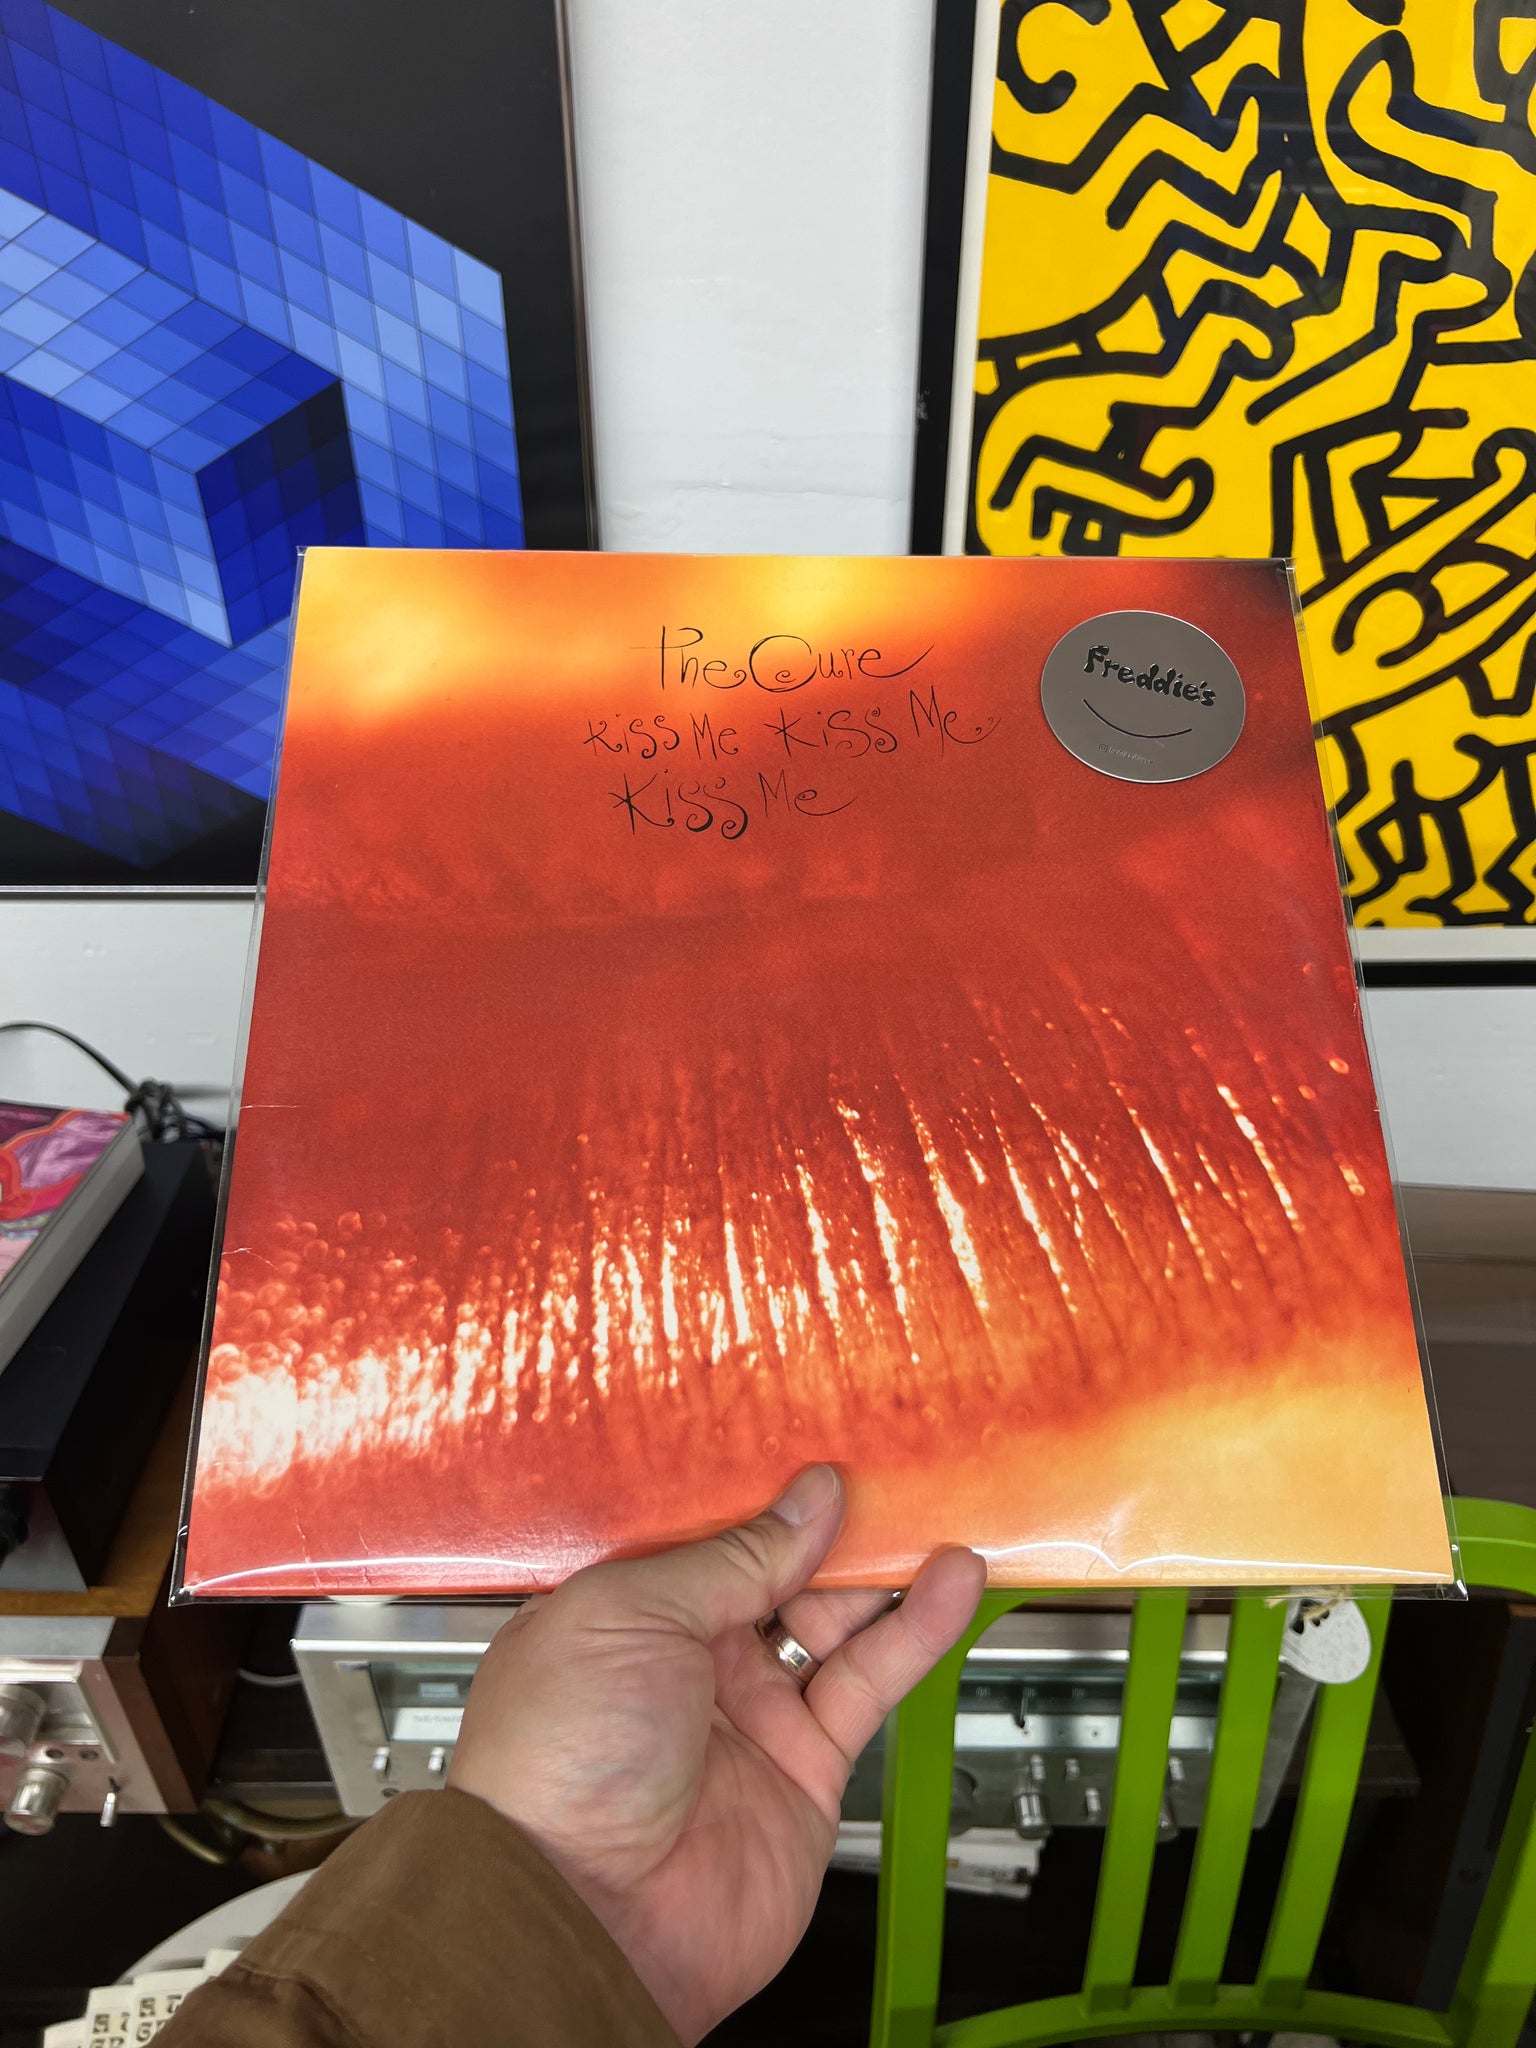 The Cure - Kiss Me Kiss Me Kiss Me - Elektra – 96 07371 VG++ 2x LP